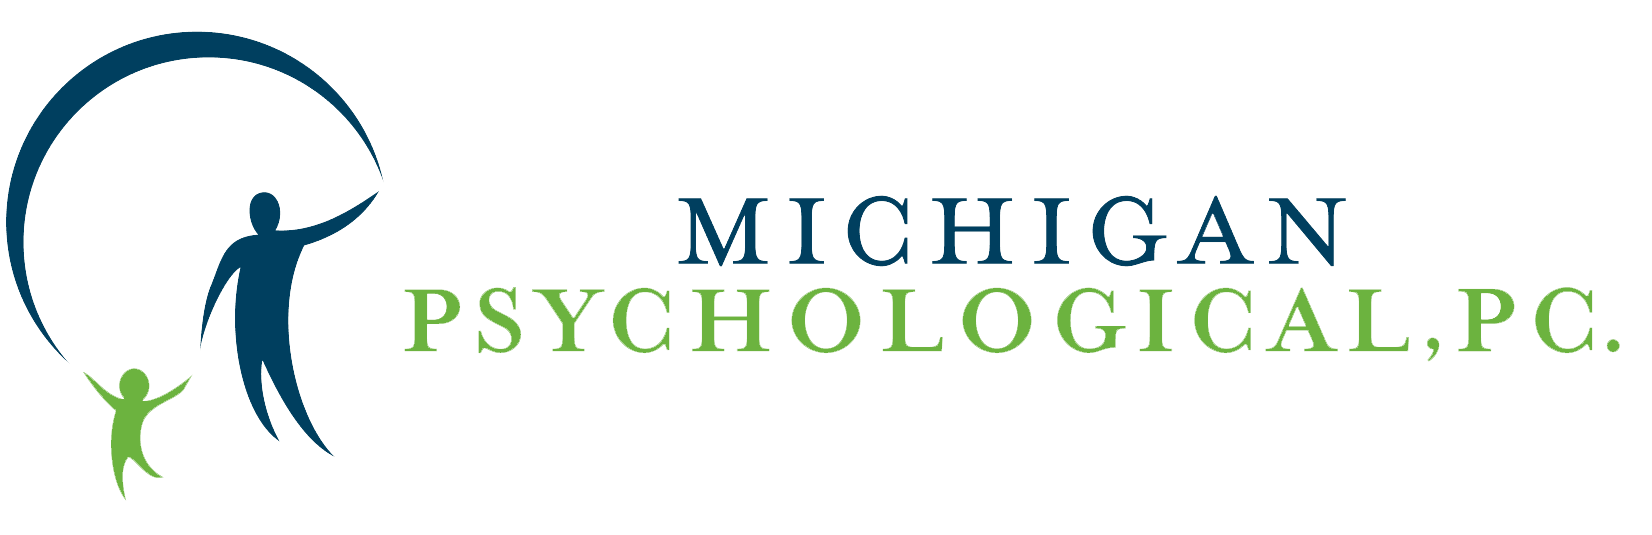 Our Team | Michigan Psychological P.C